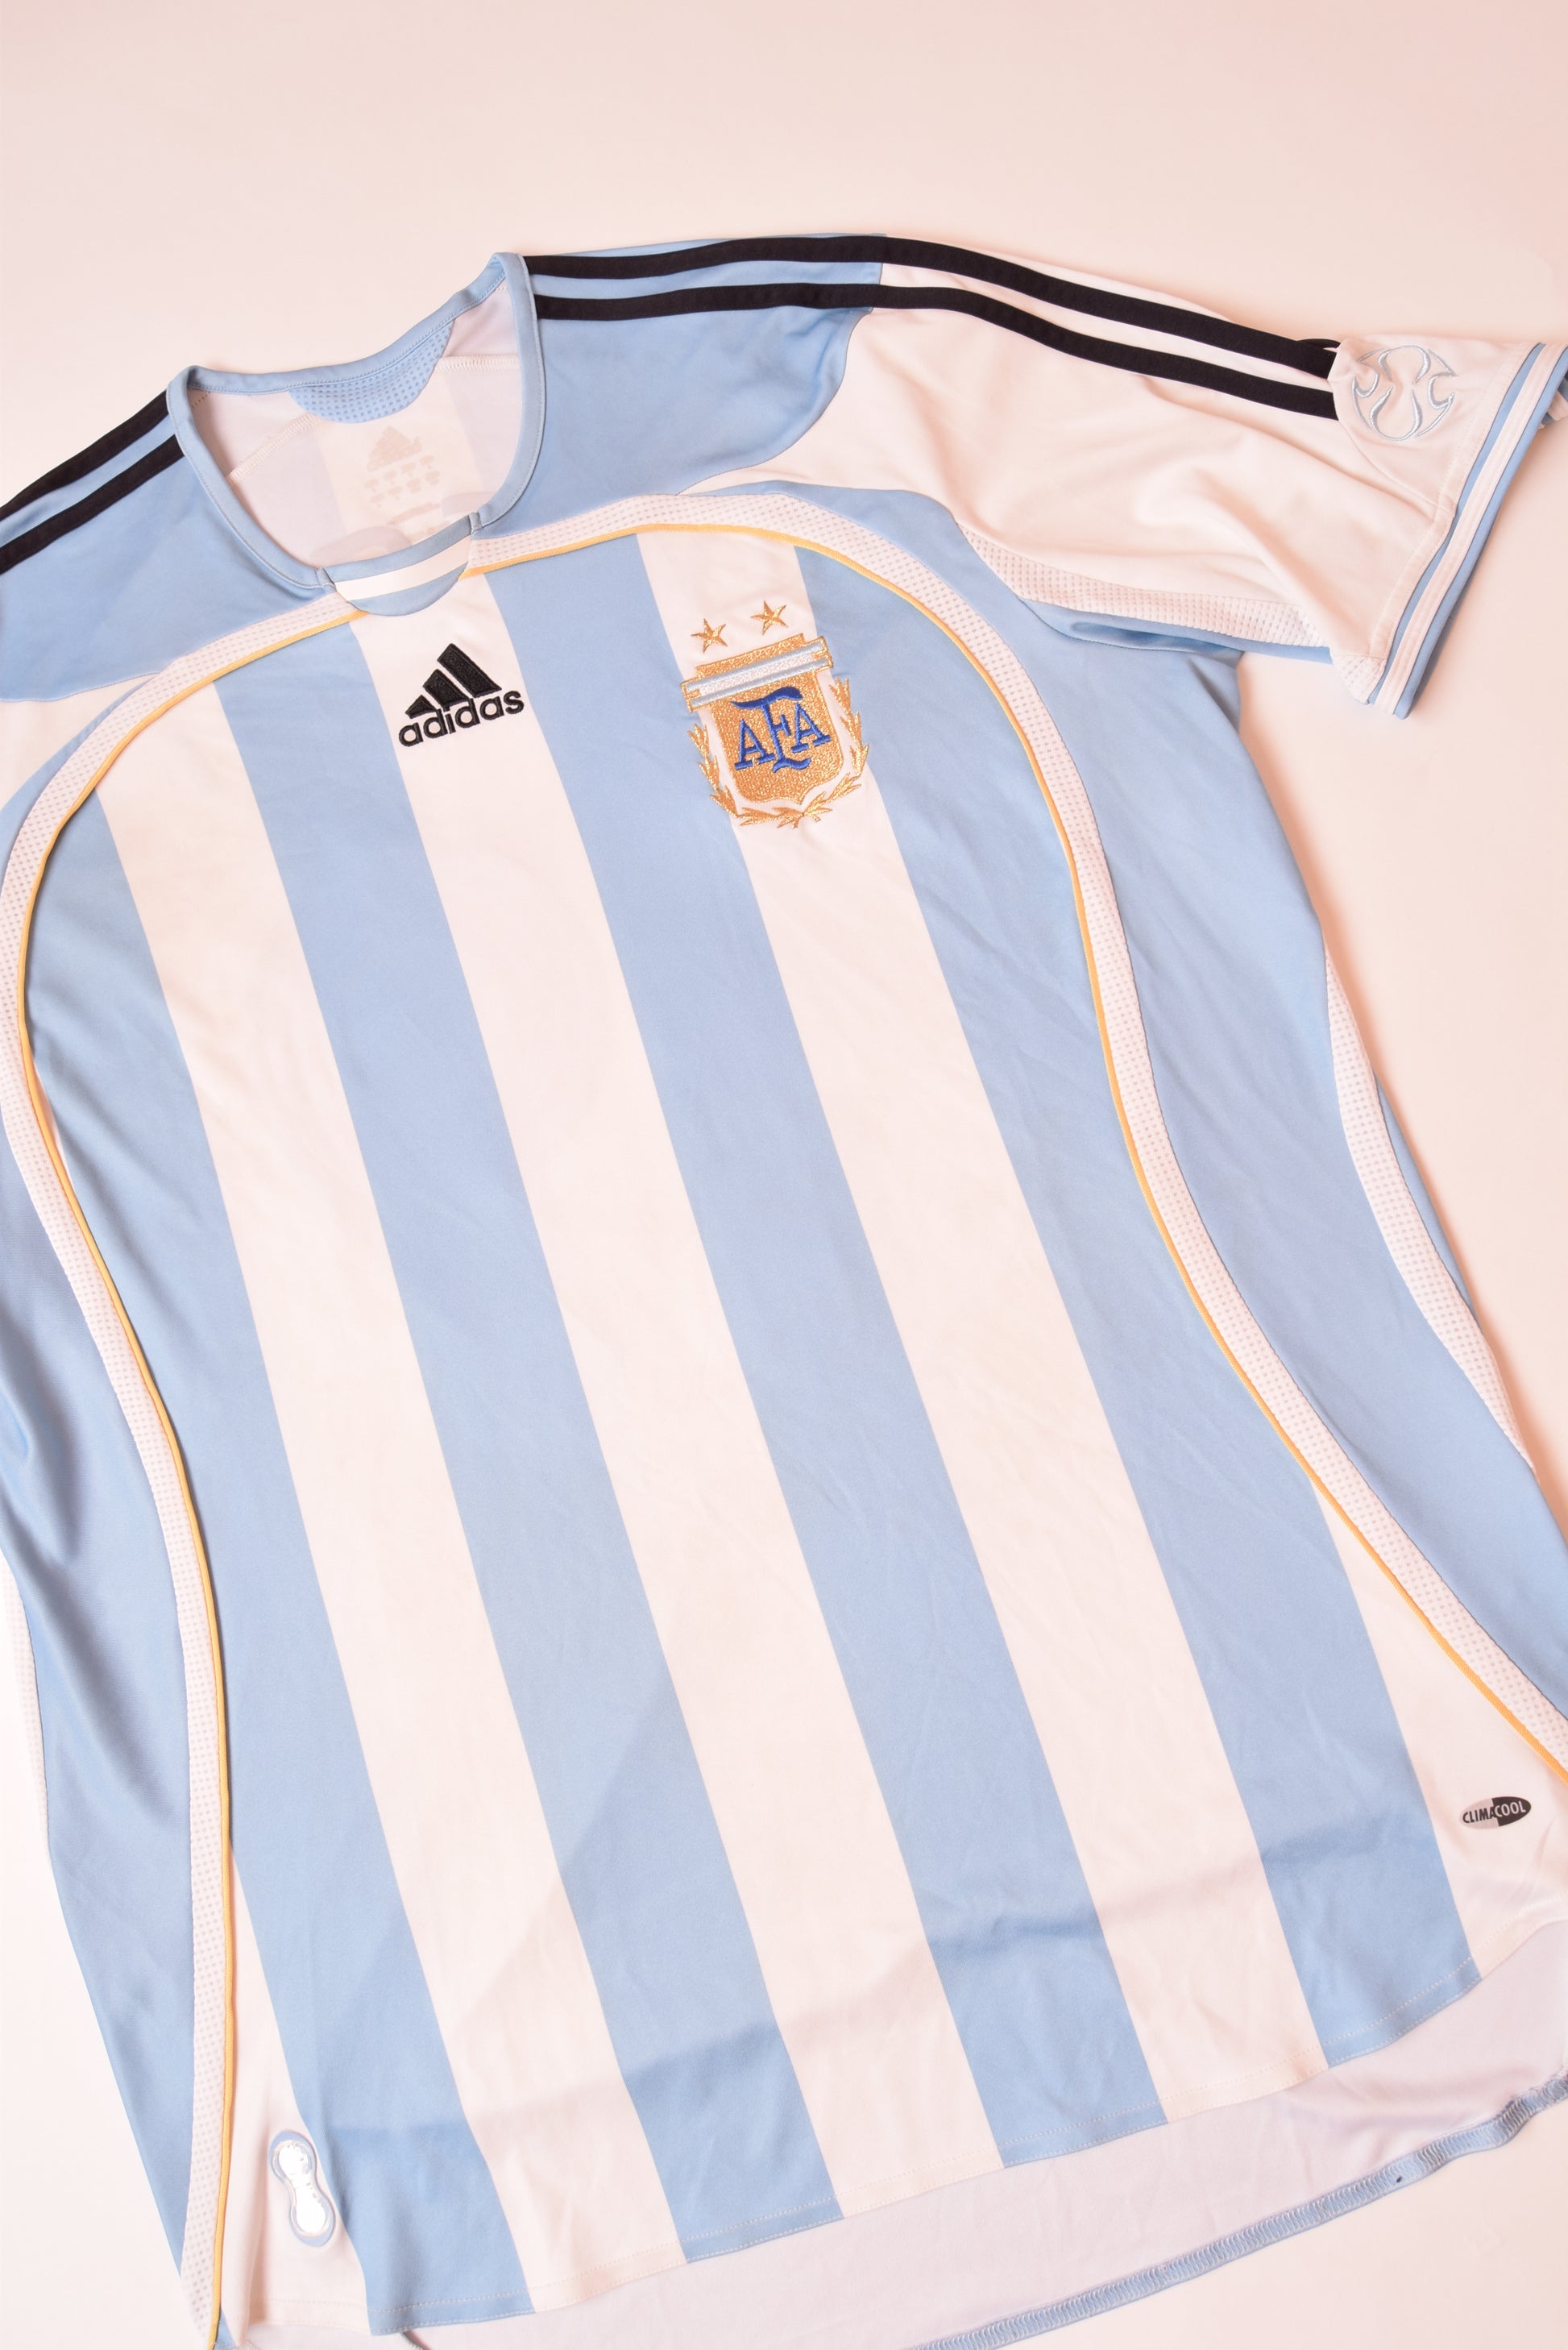 Adidas 2005-07 Argentina Home Football Shirt Messi #19 Size L